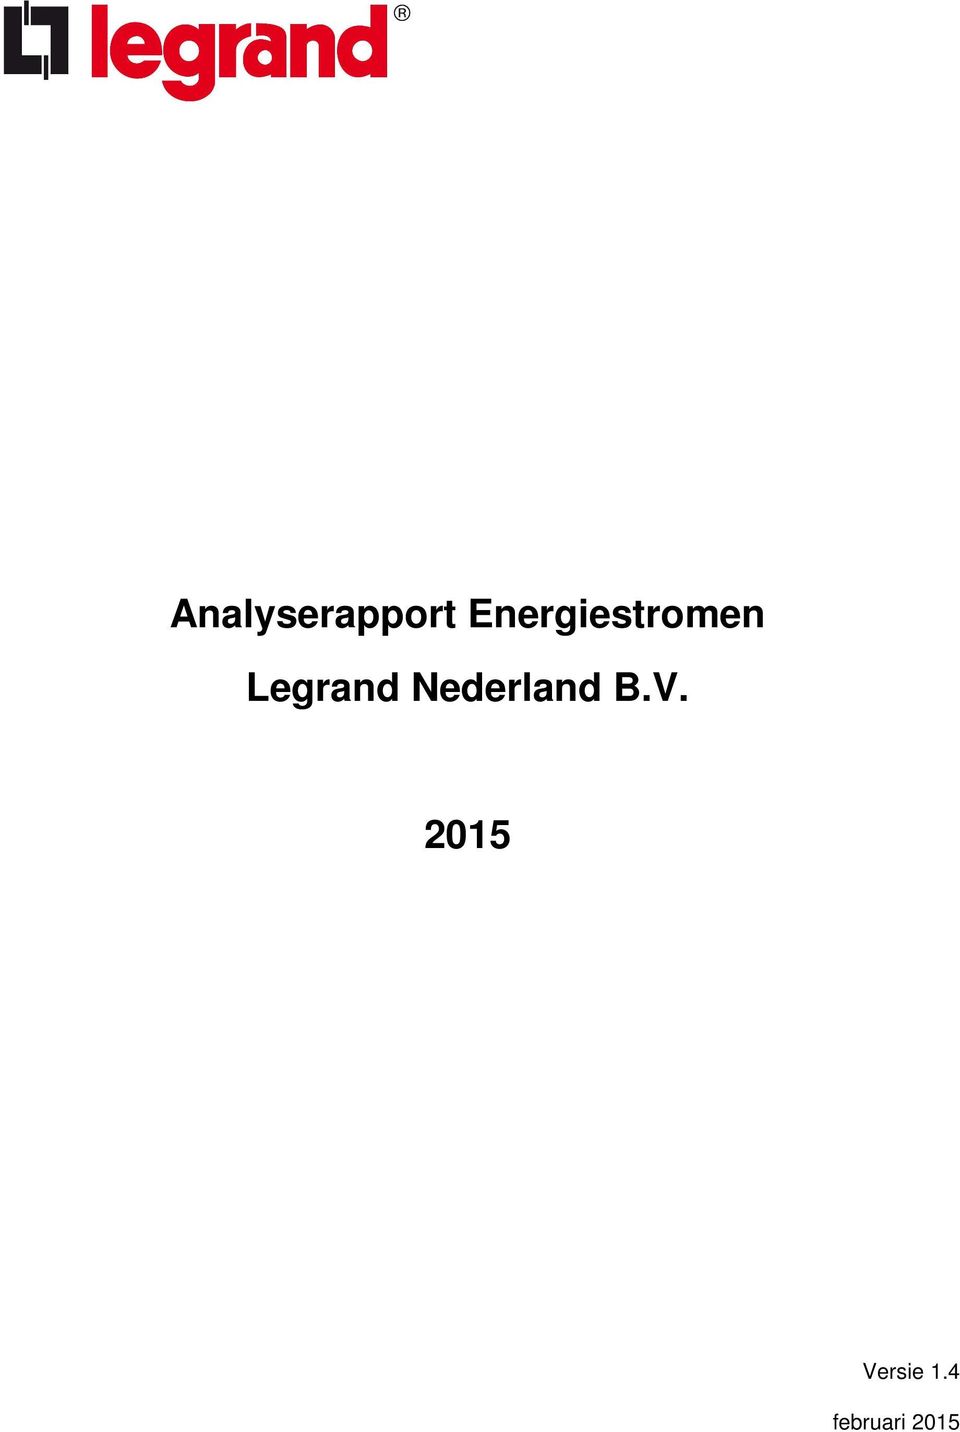 Legrand Nederland B.